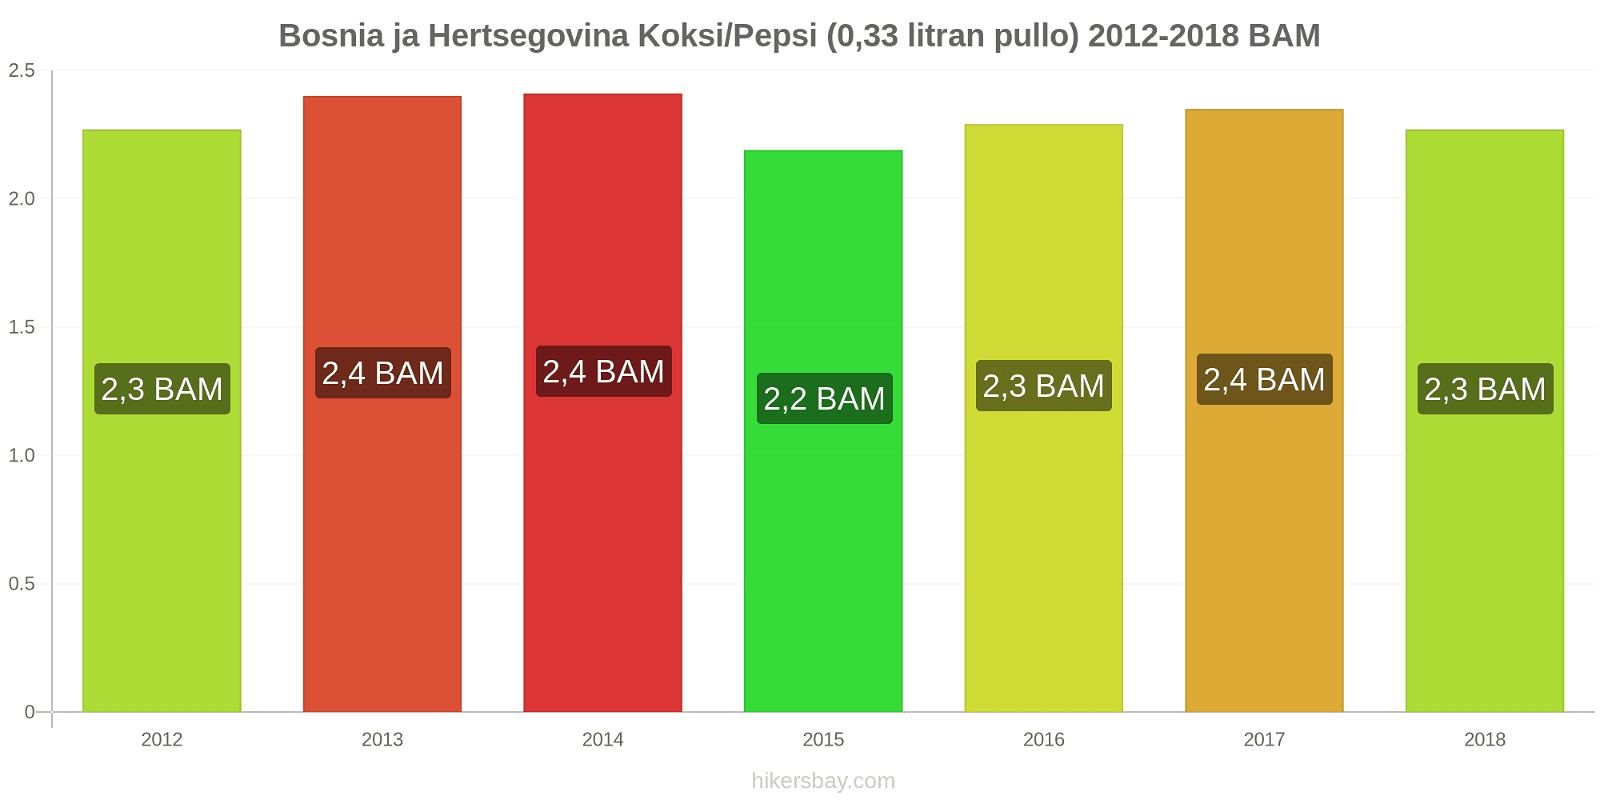 Bosnia ja Hertsegovina hintojen muutokset Coca-Cola/Pepsi (0.33 litran pullo) hikersbay.com